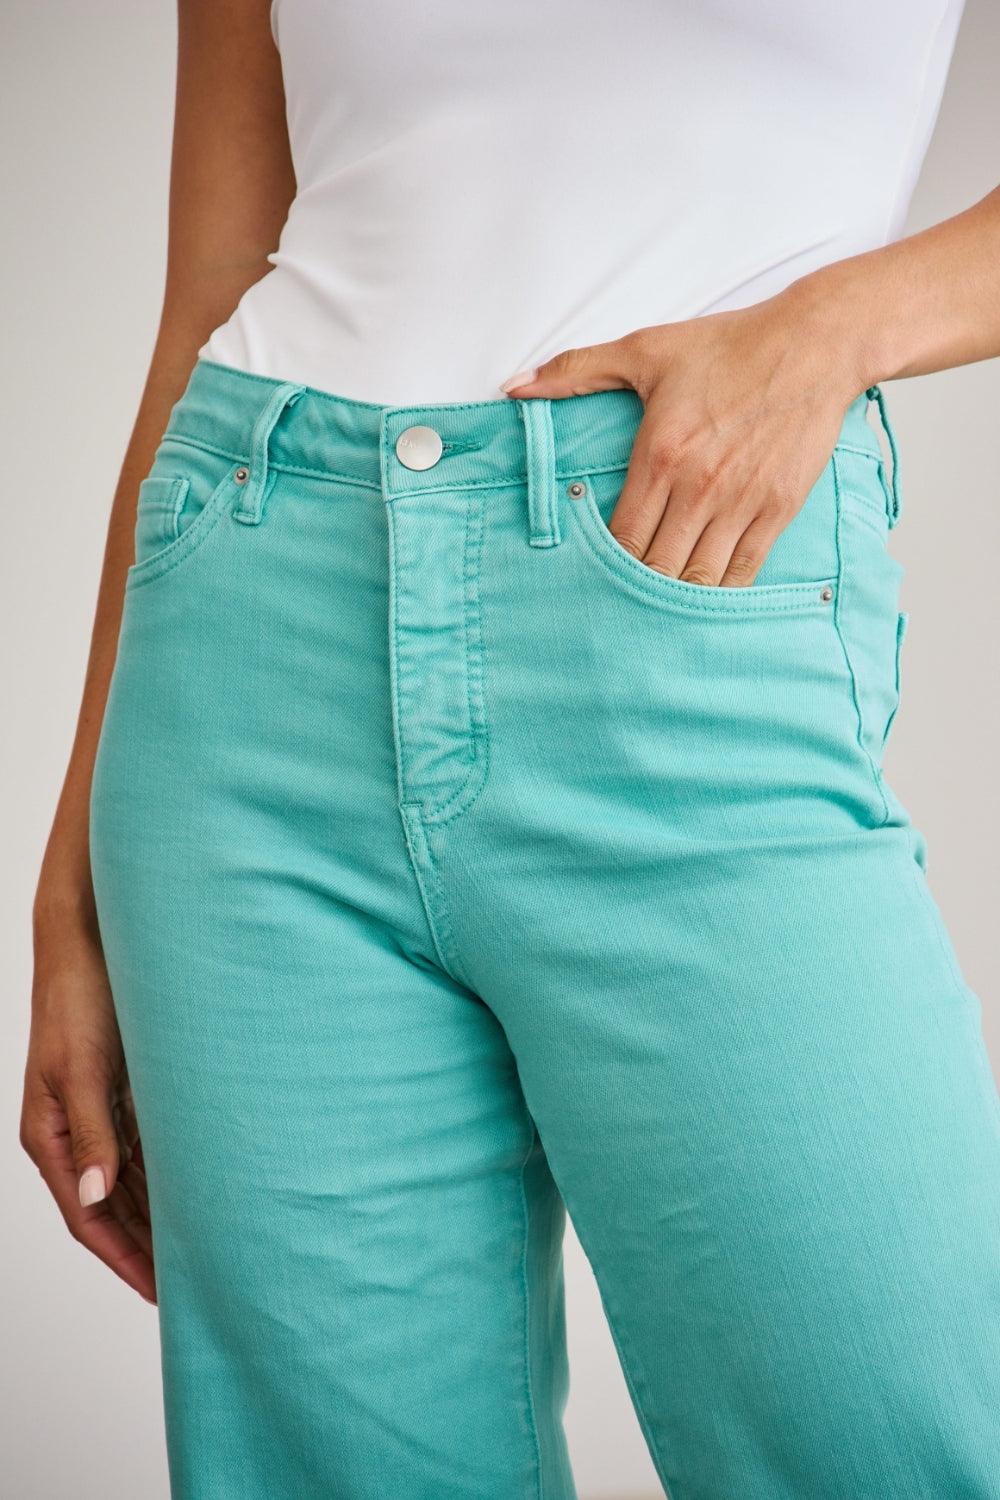 Bona Fide Fashion - Full Size Tummy Control High Waist Raw Hem Jeans - Women Fashion - Bona Fide Fashion